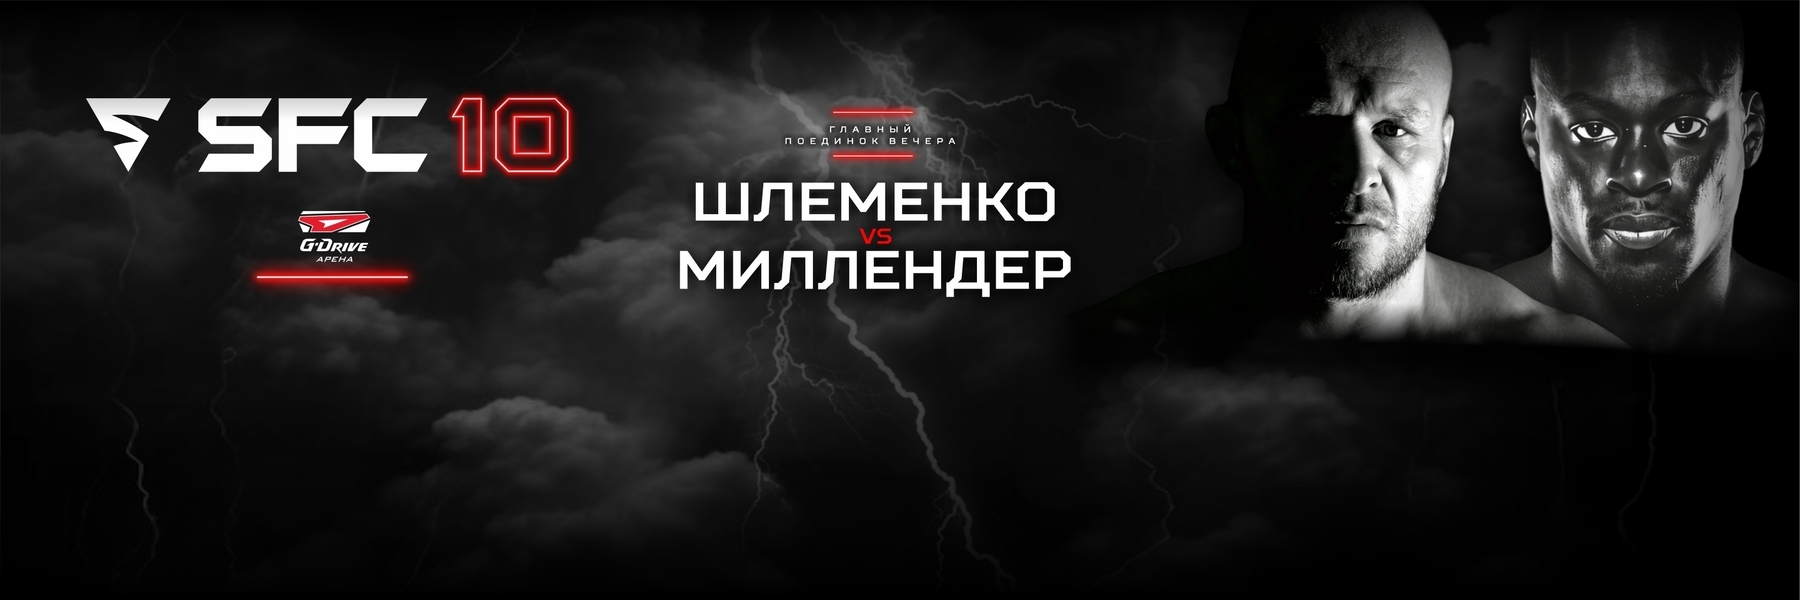 SFC 10: юбилейный турнир по ММА лиги Александра Шлеменко